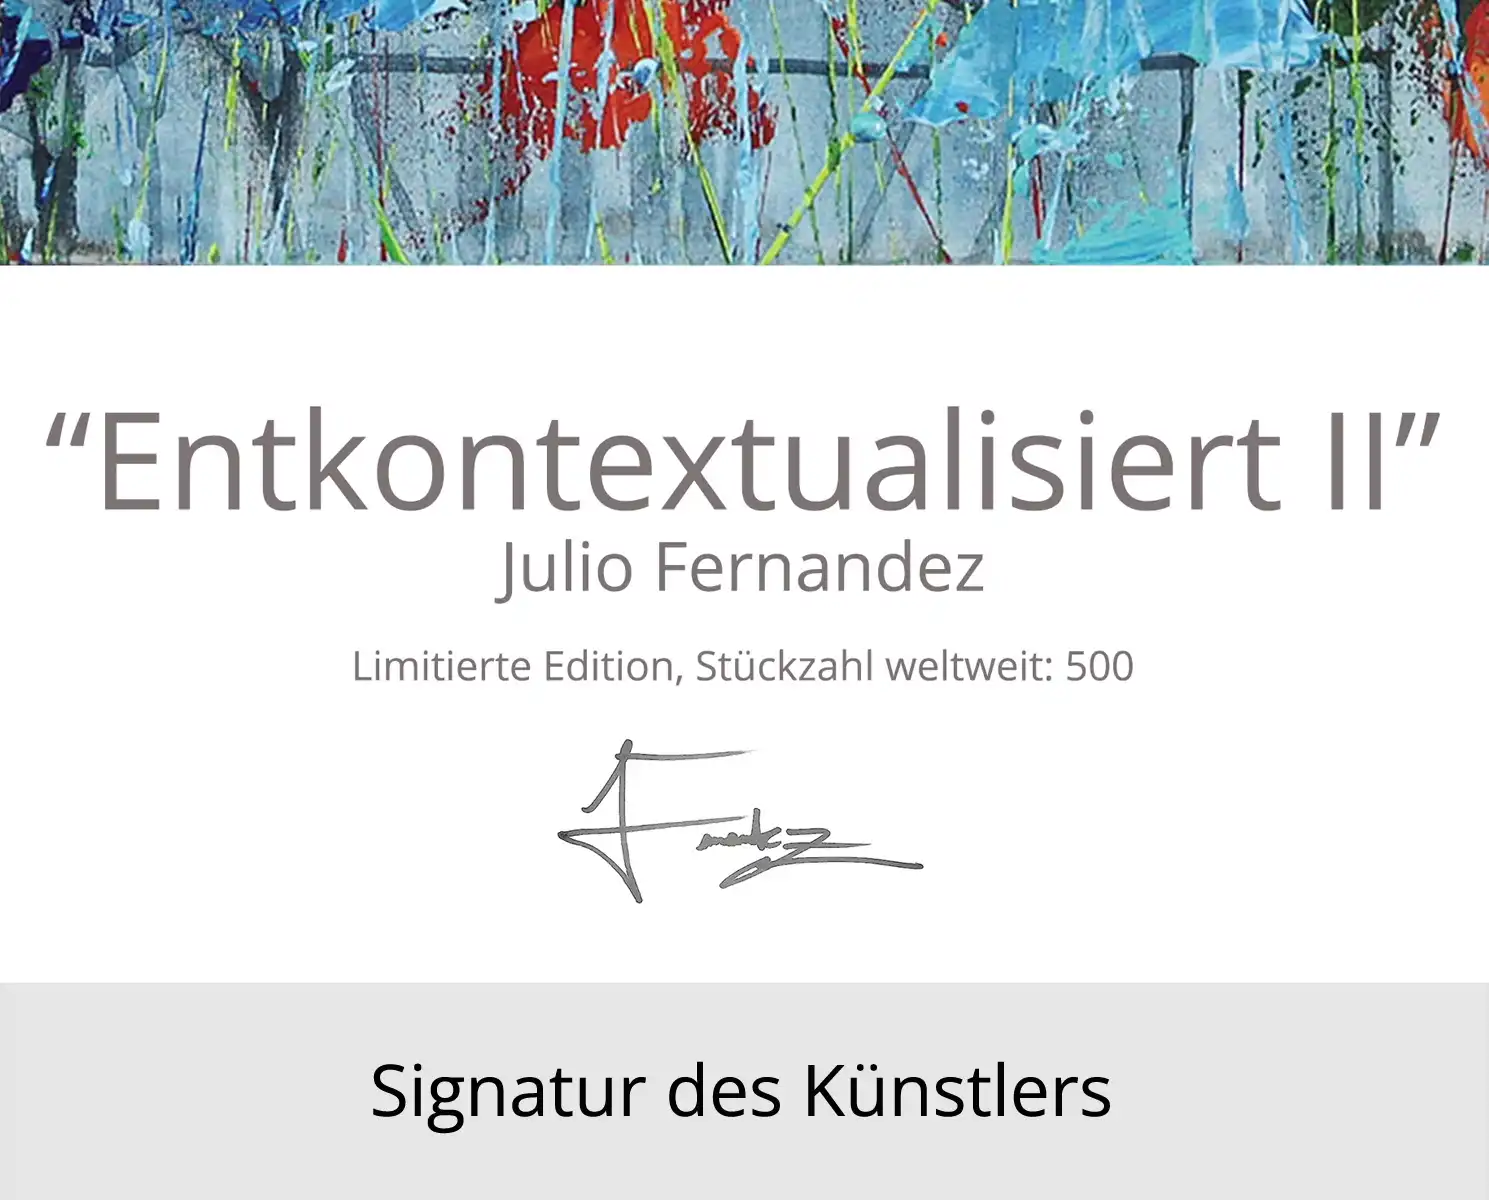 Limitierte Edition auf Papier, J. Fernandez "Entkontextualisiert II", Fineartprint, Kollektion E&K